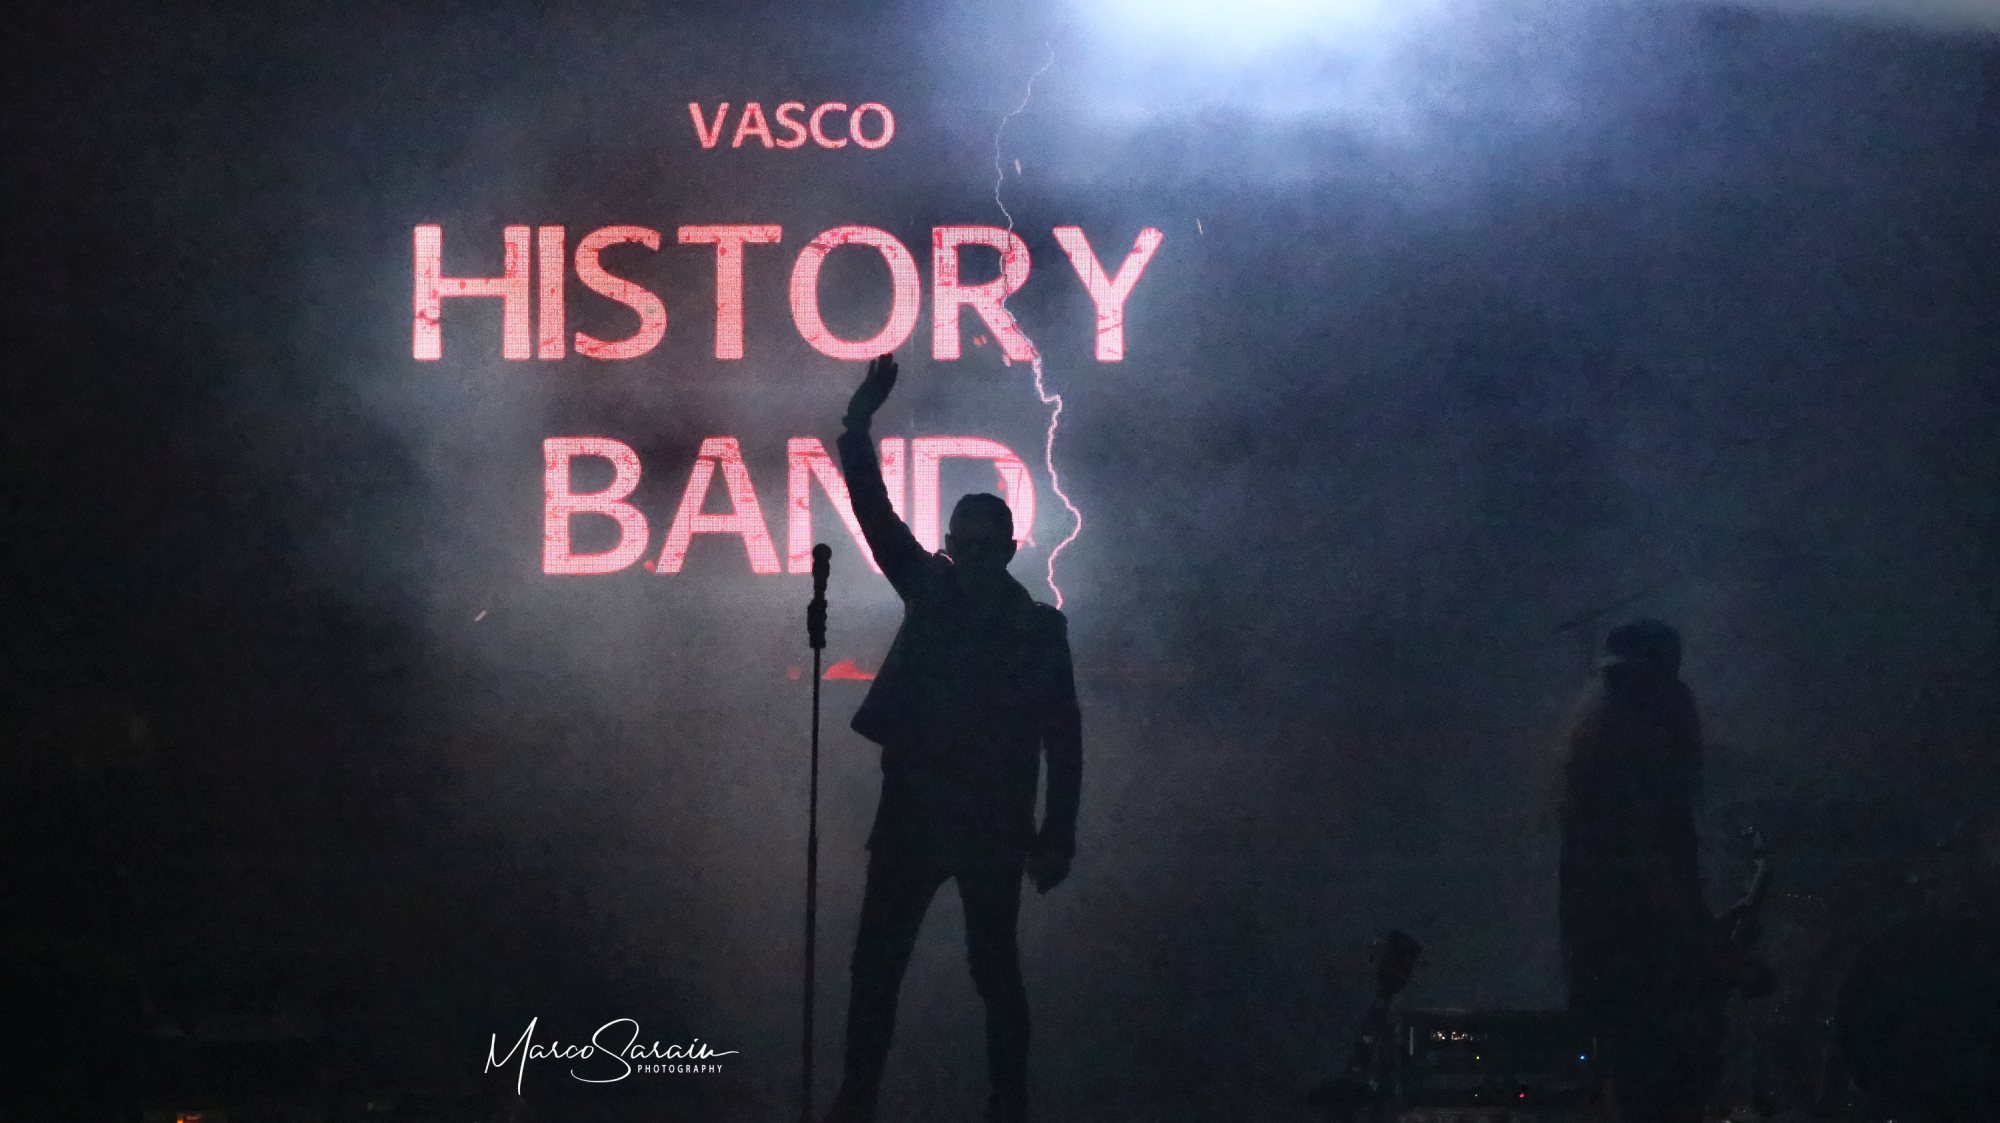 Vasco History Band